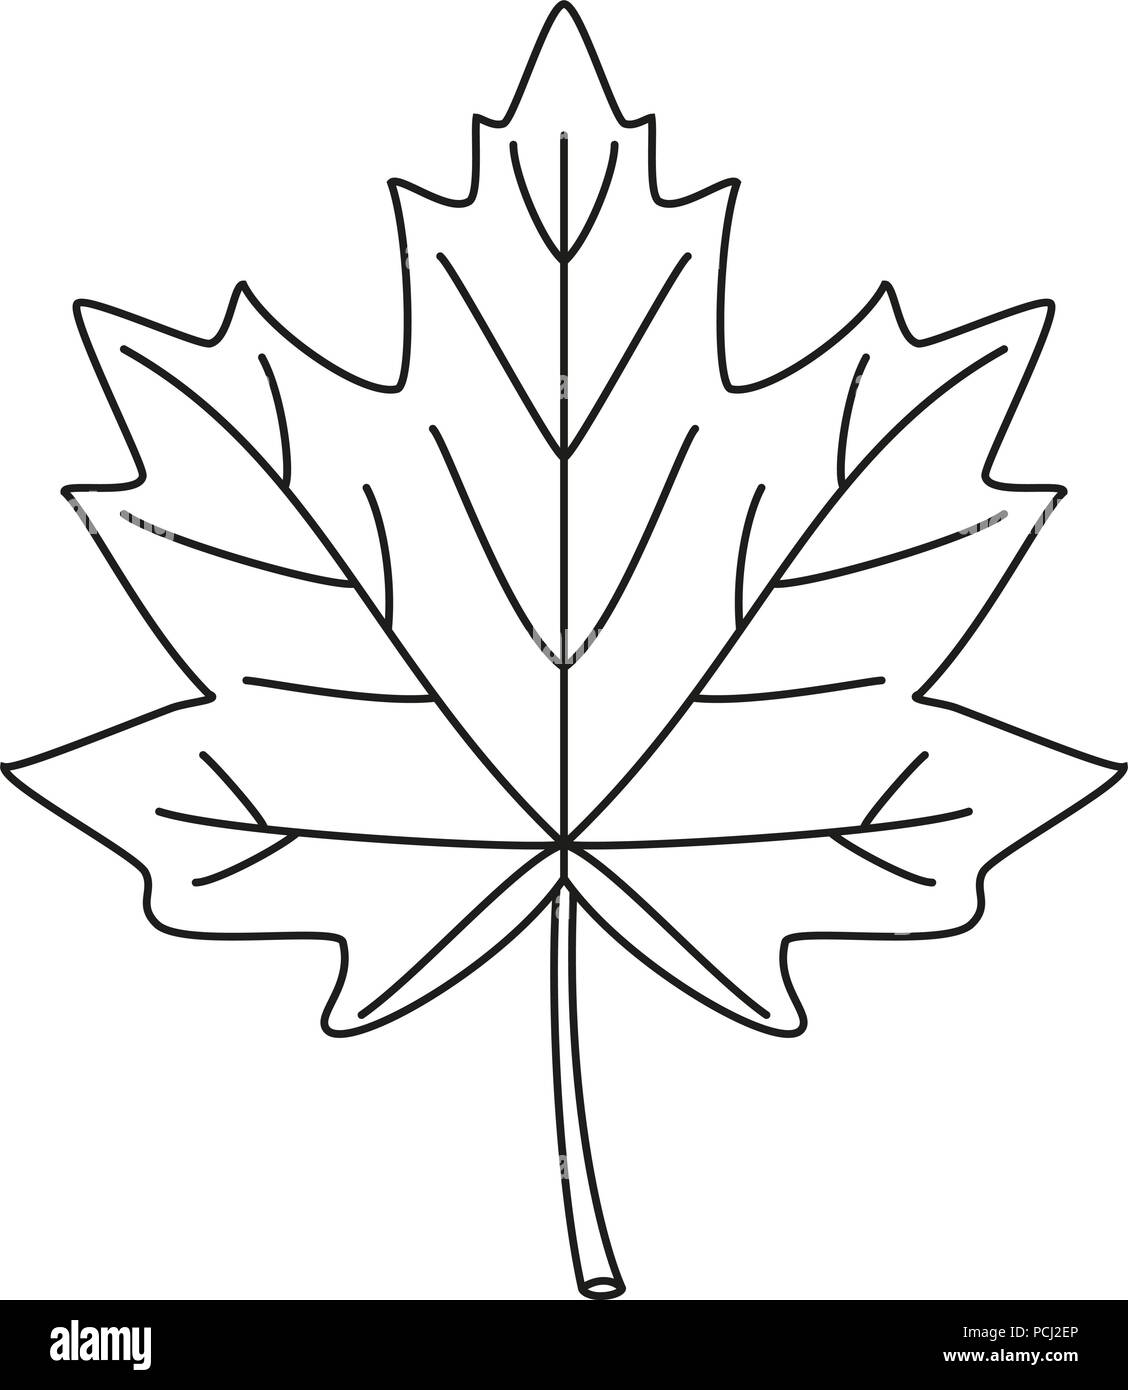 Line art black and white maple leaf Stock Vector